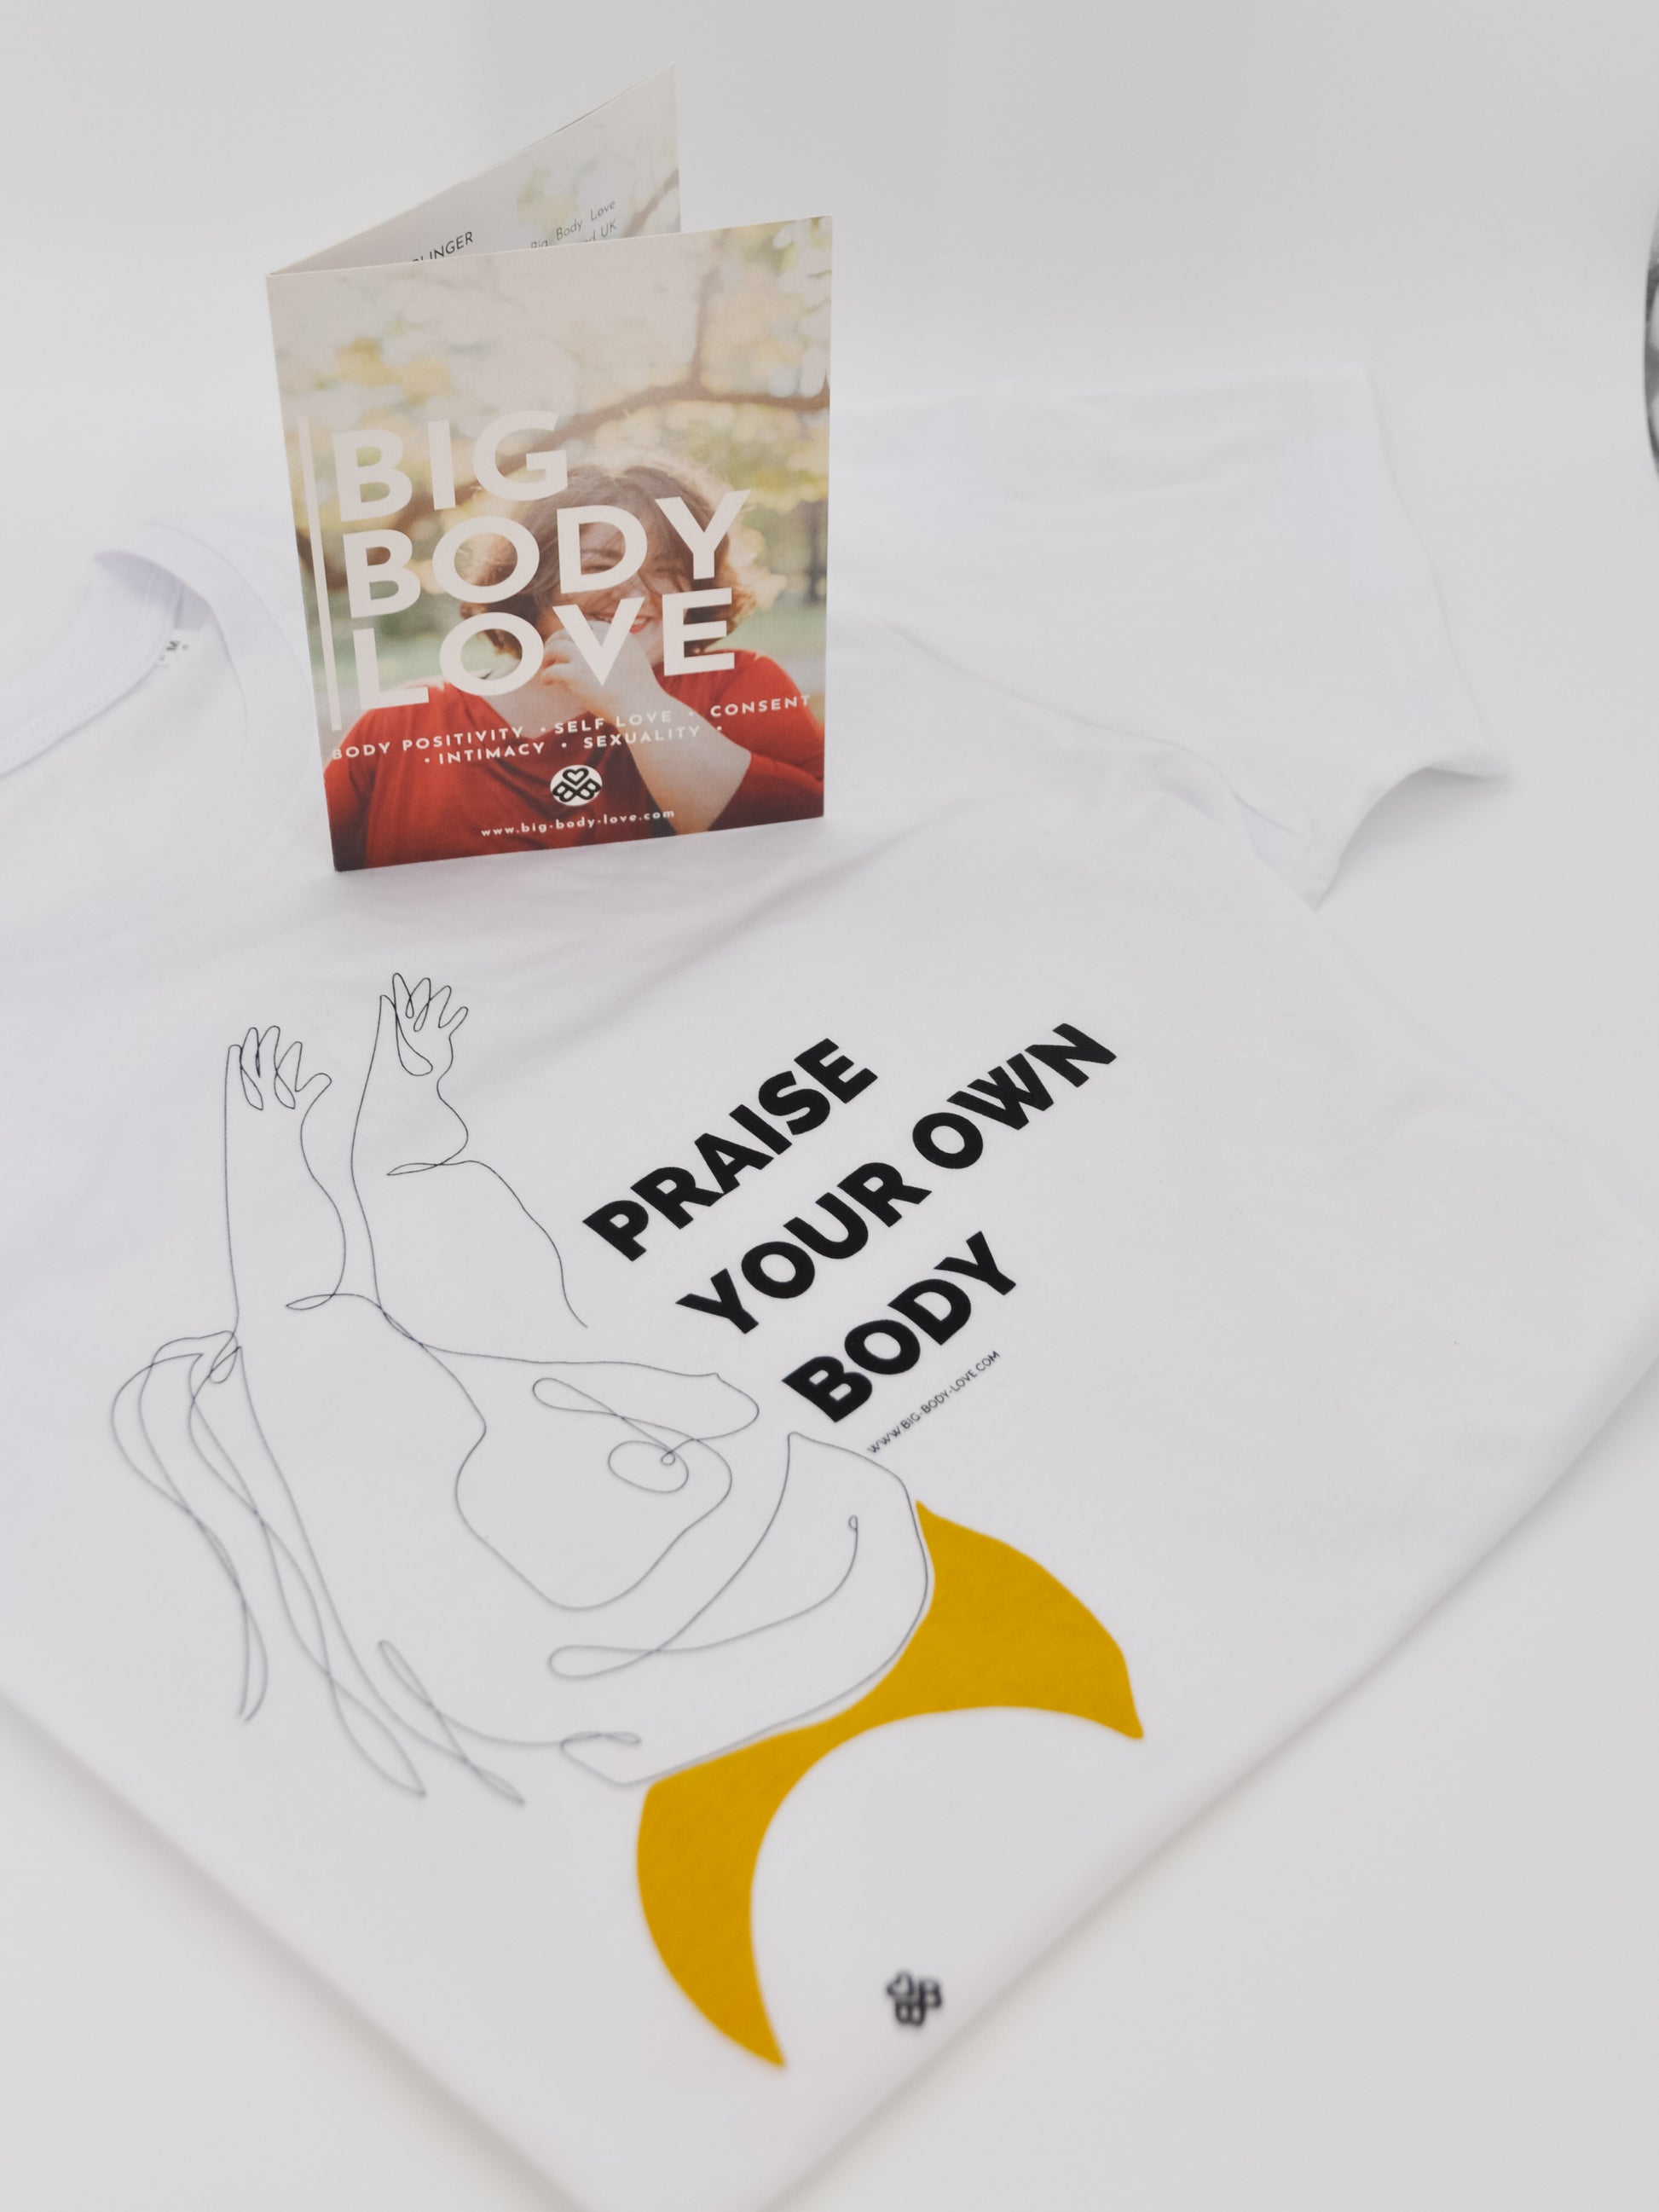 Praise your own body | Shirt - Vulva Shop